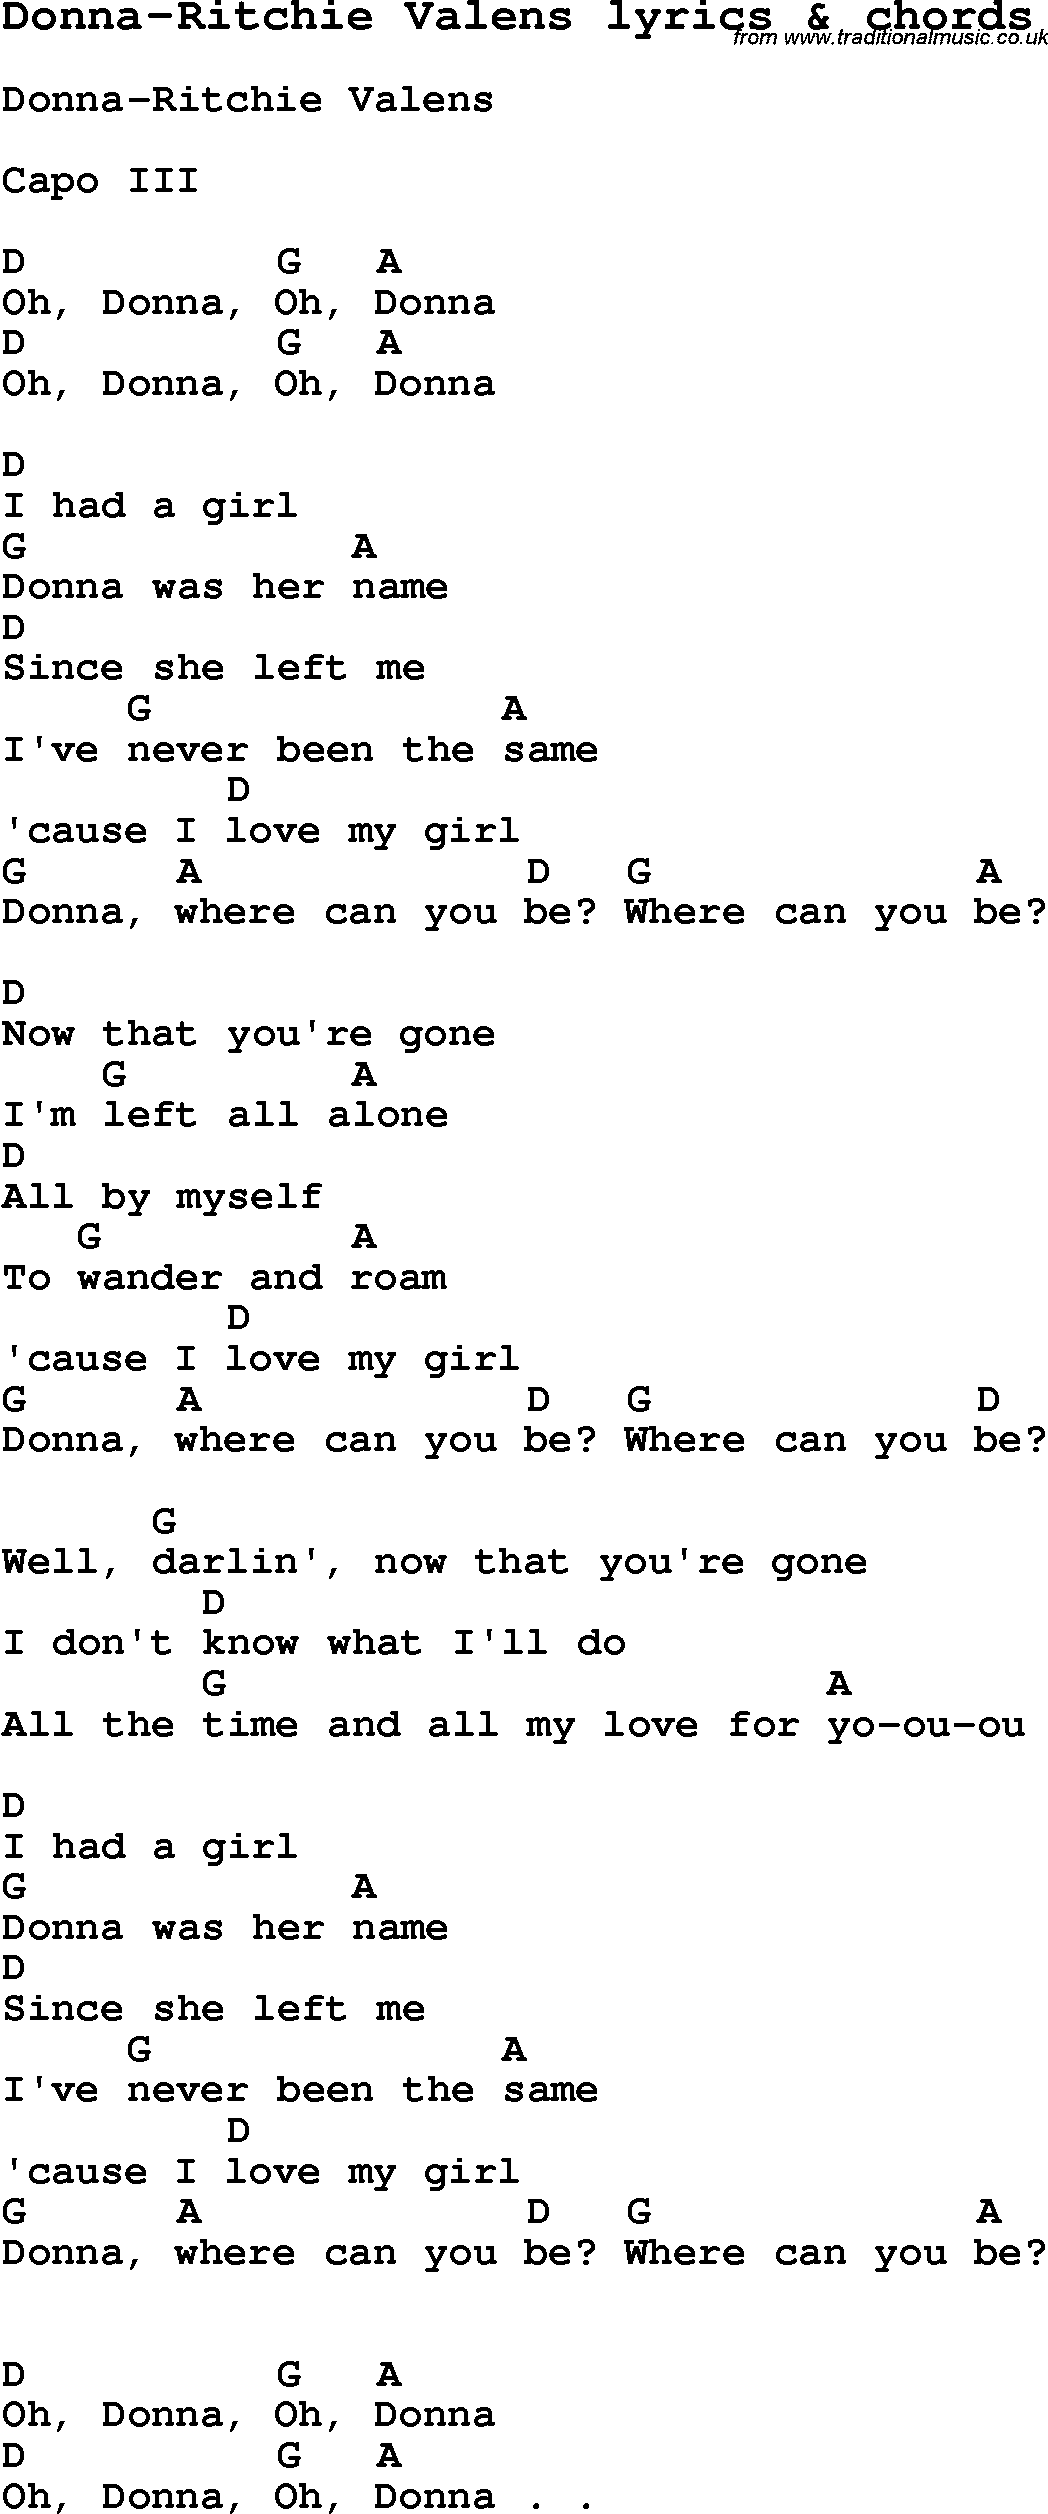 Love Song Lyrics for: Donna-Ritchie Valens with chords for Ukulele, Guitar Banjo etc.